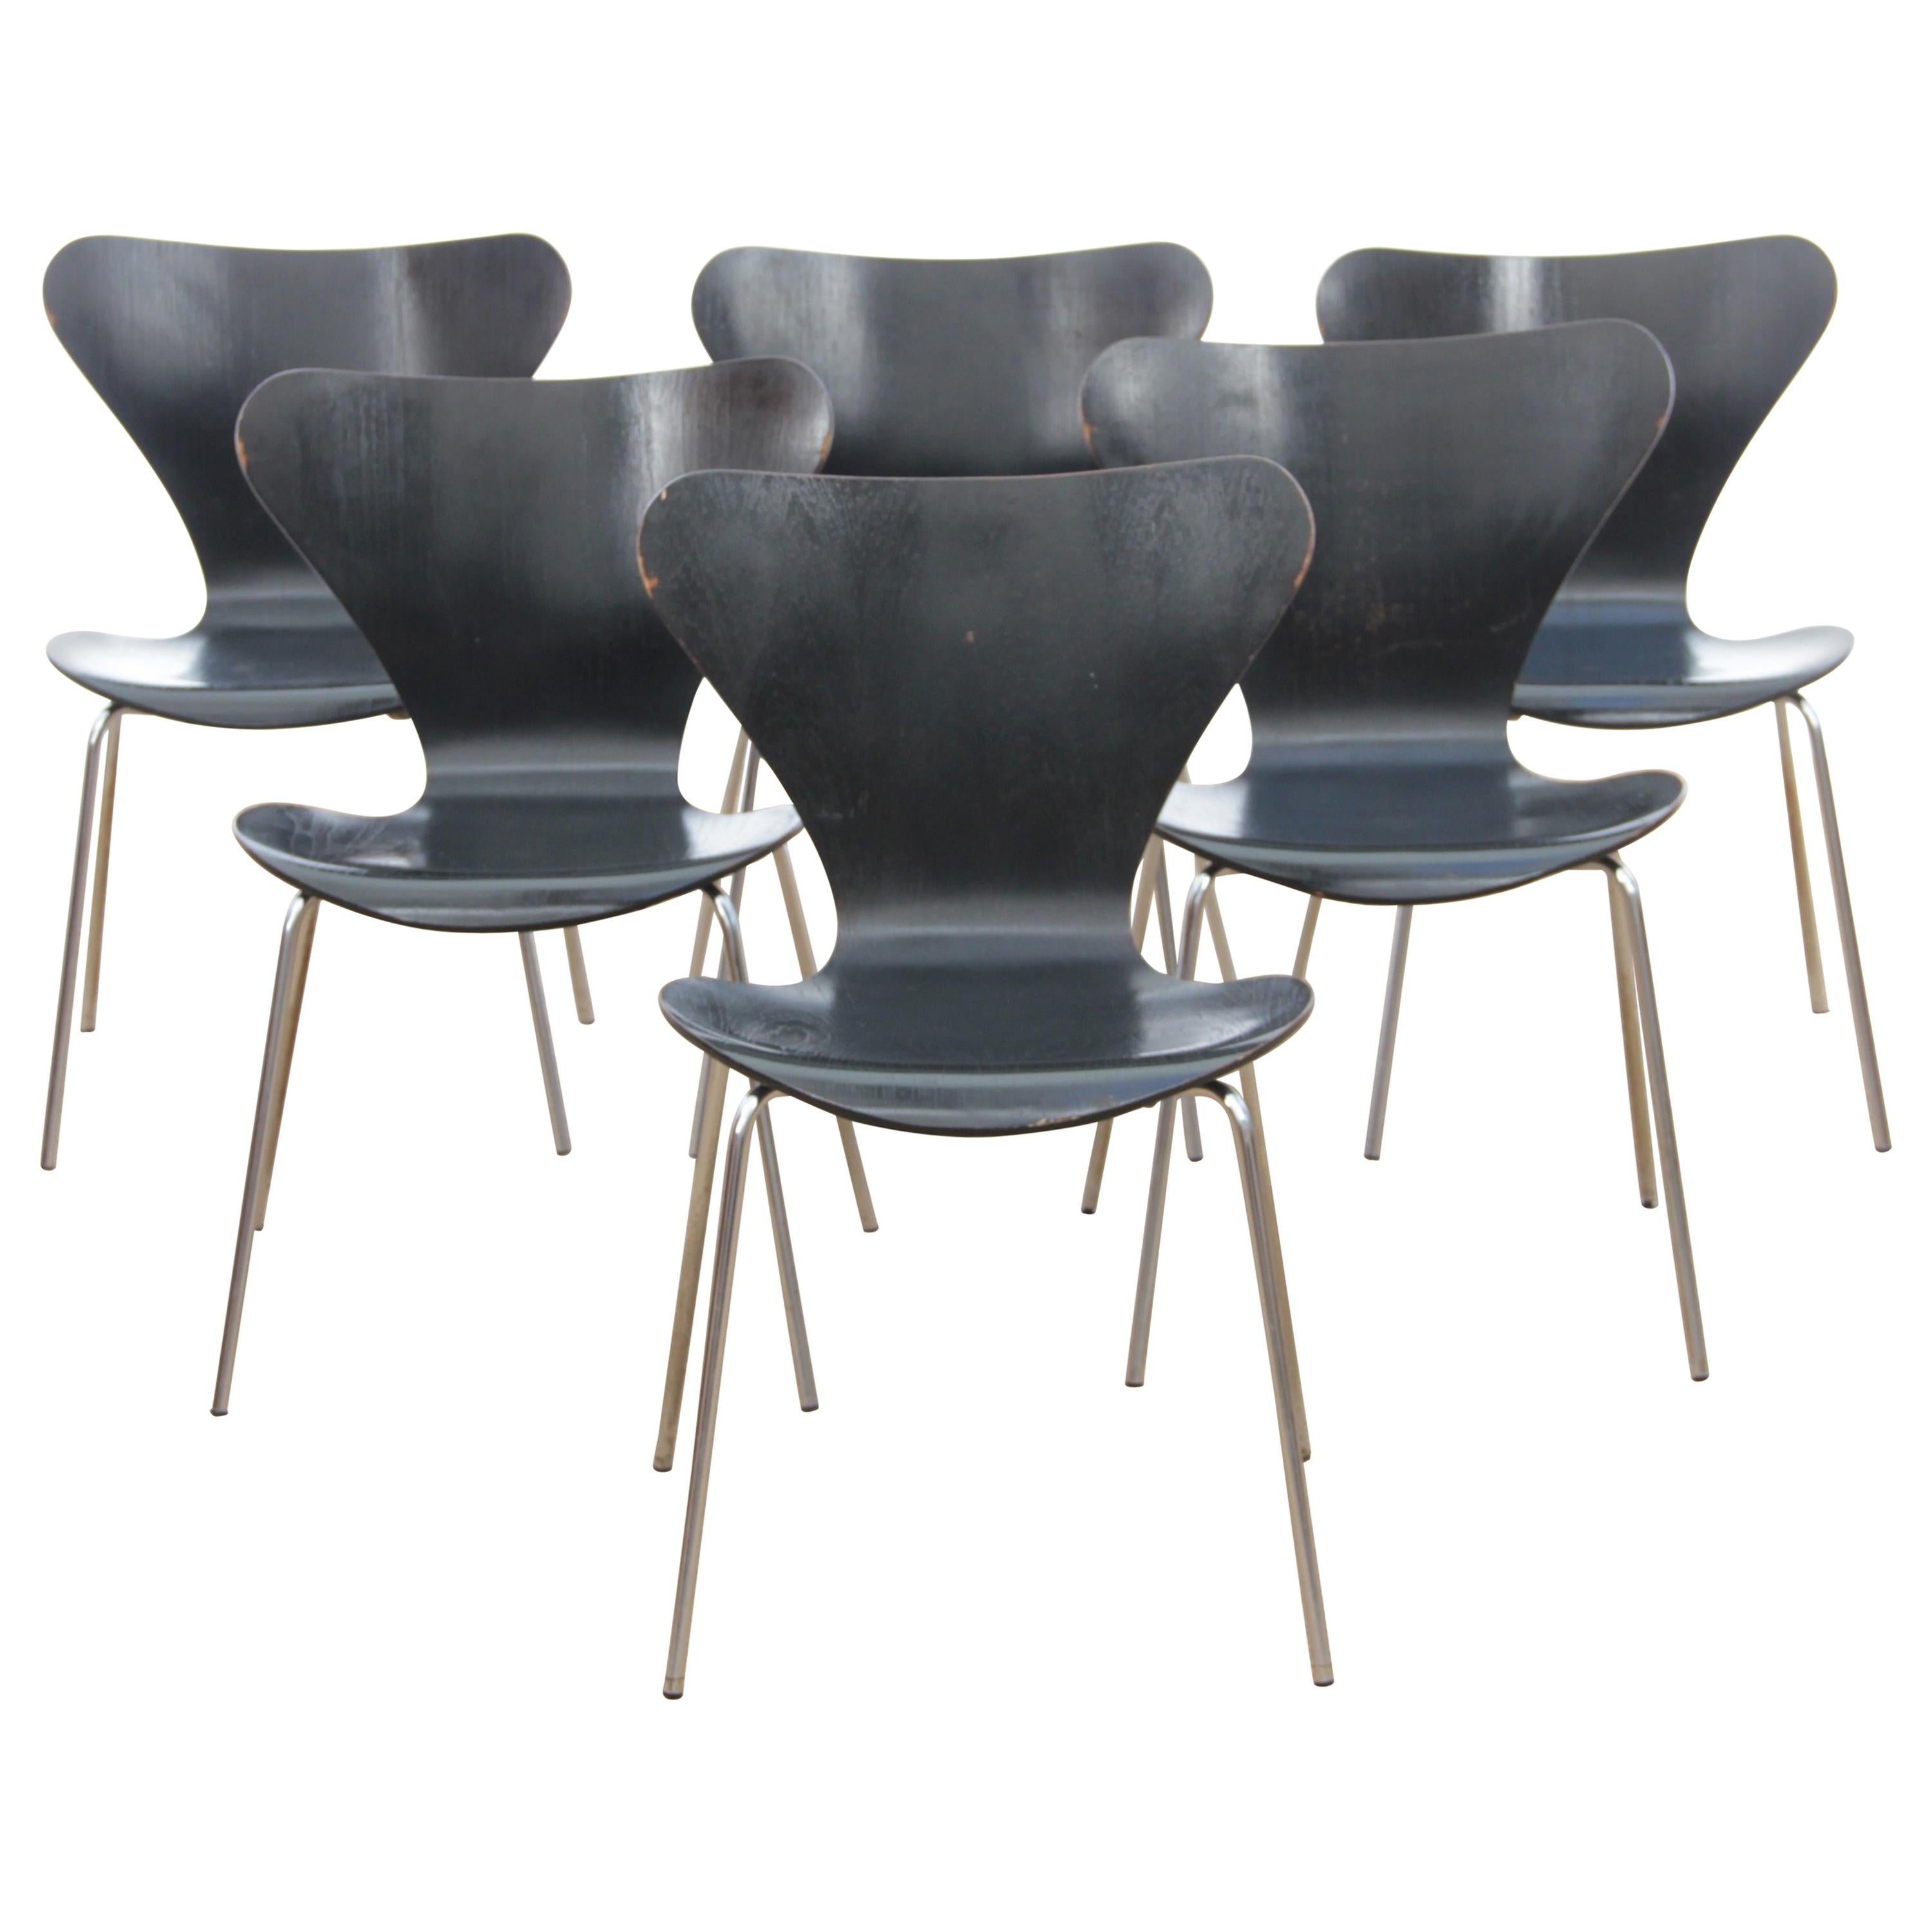 Mid-Century Modern Scandinavian Set of 6 Chairs by Arne Jacobsen